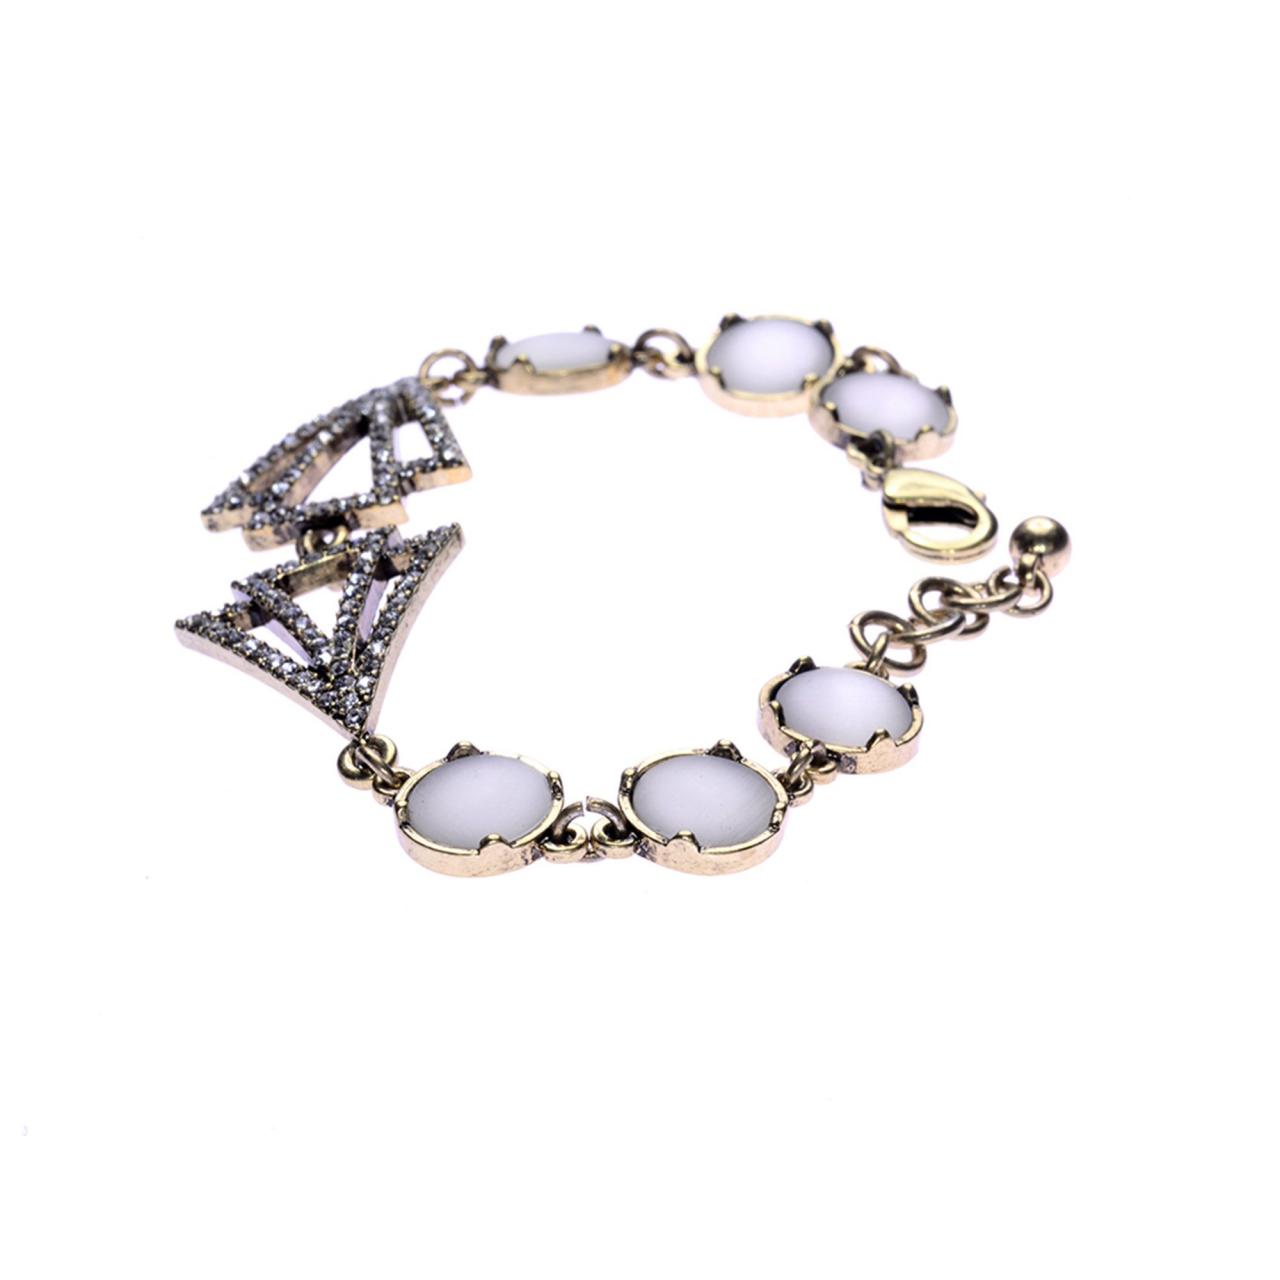 Art Deco Bracelet / Vintage Bracelet / Bracelet Femme / Opal Bracelet / Gatsby Jewelry / Flapper Jewelry / 1920s Jewelry / Gold Chain